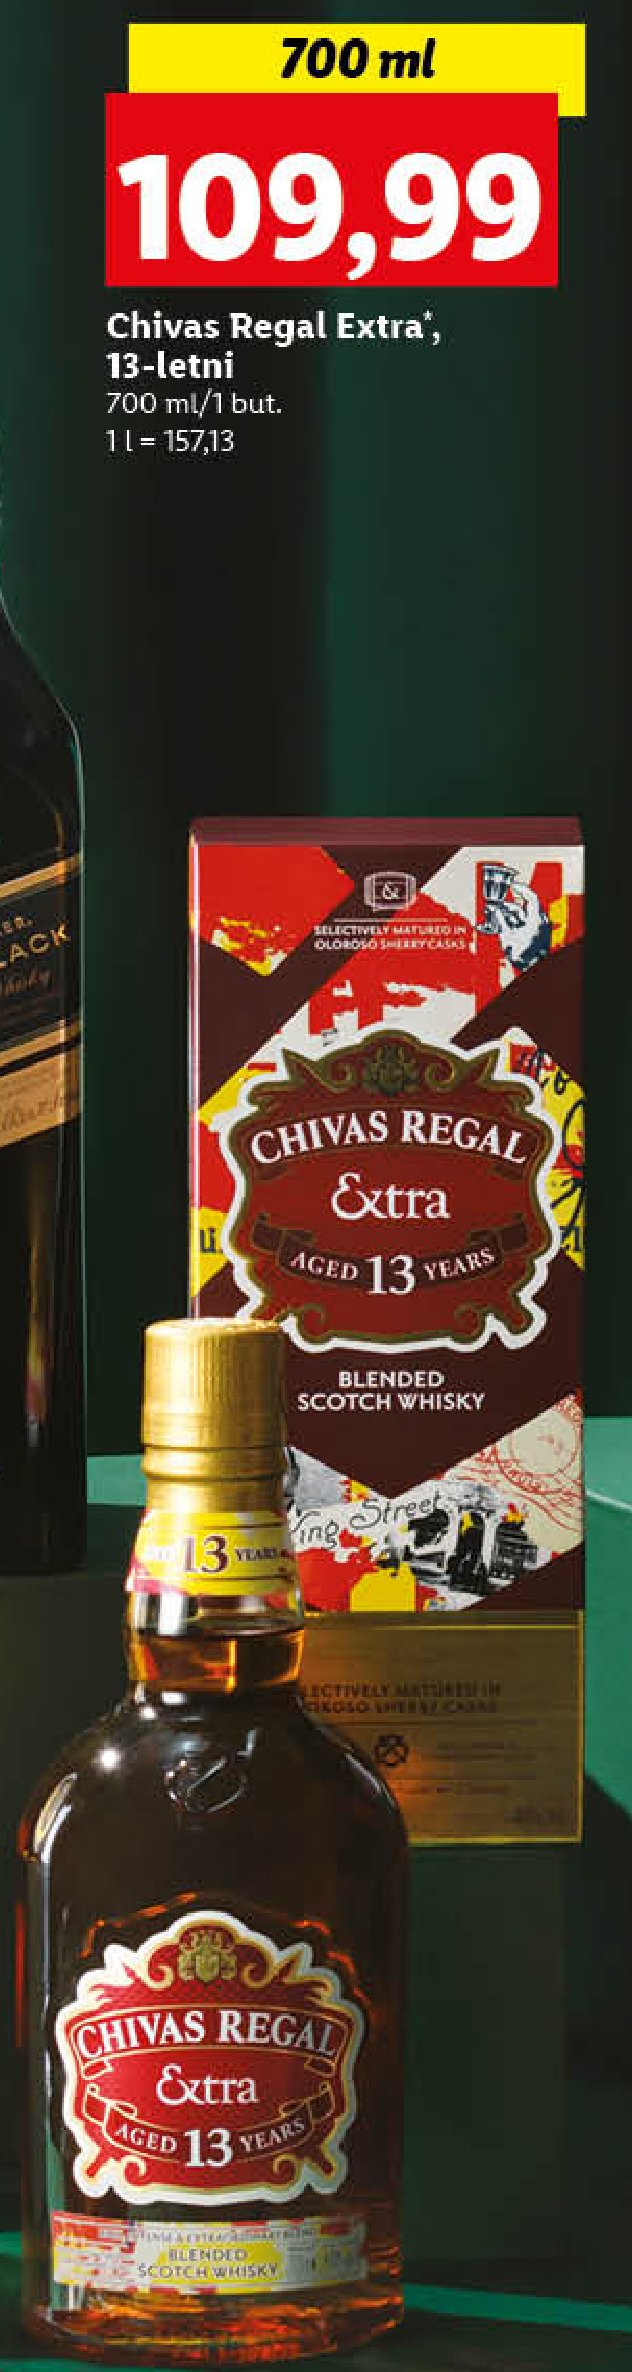 Whisky karton Chivas regal extra promocja